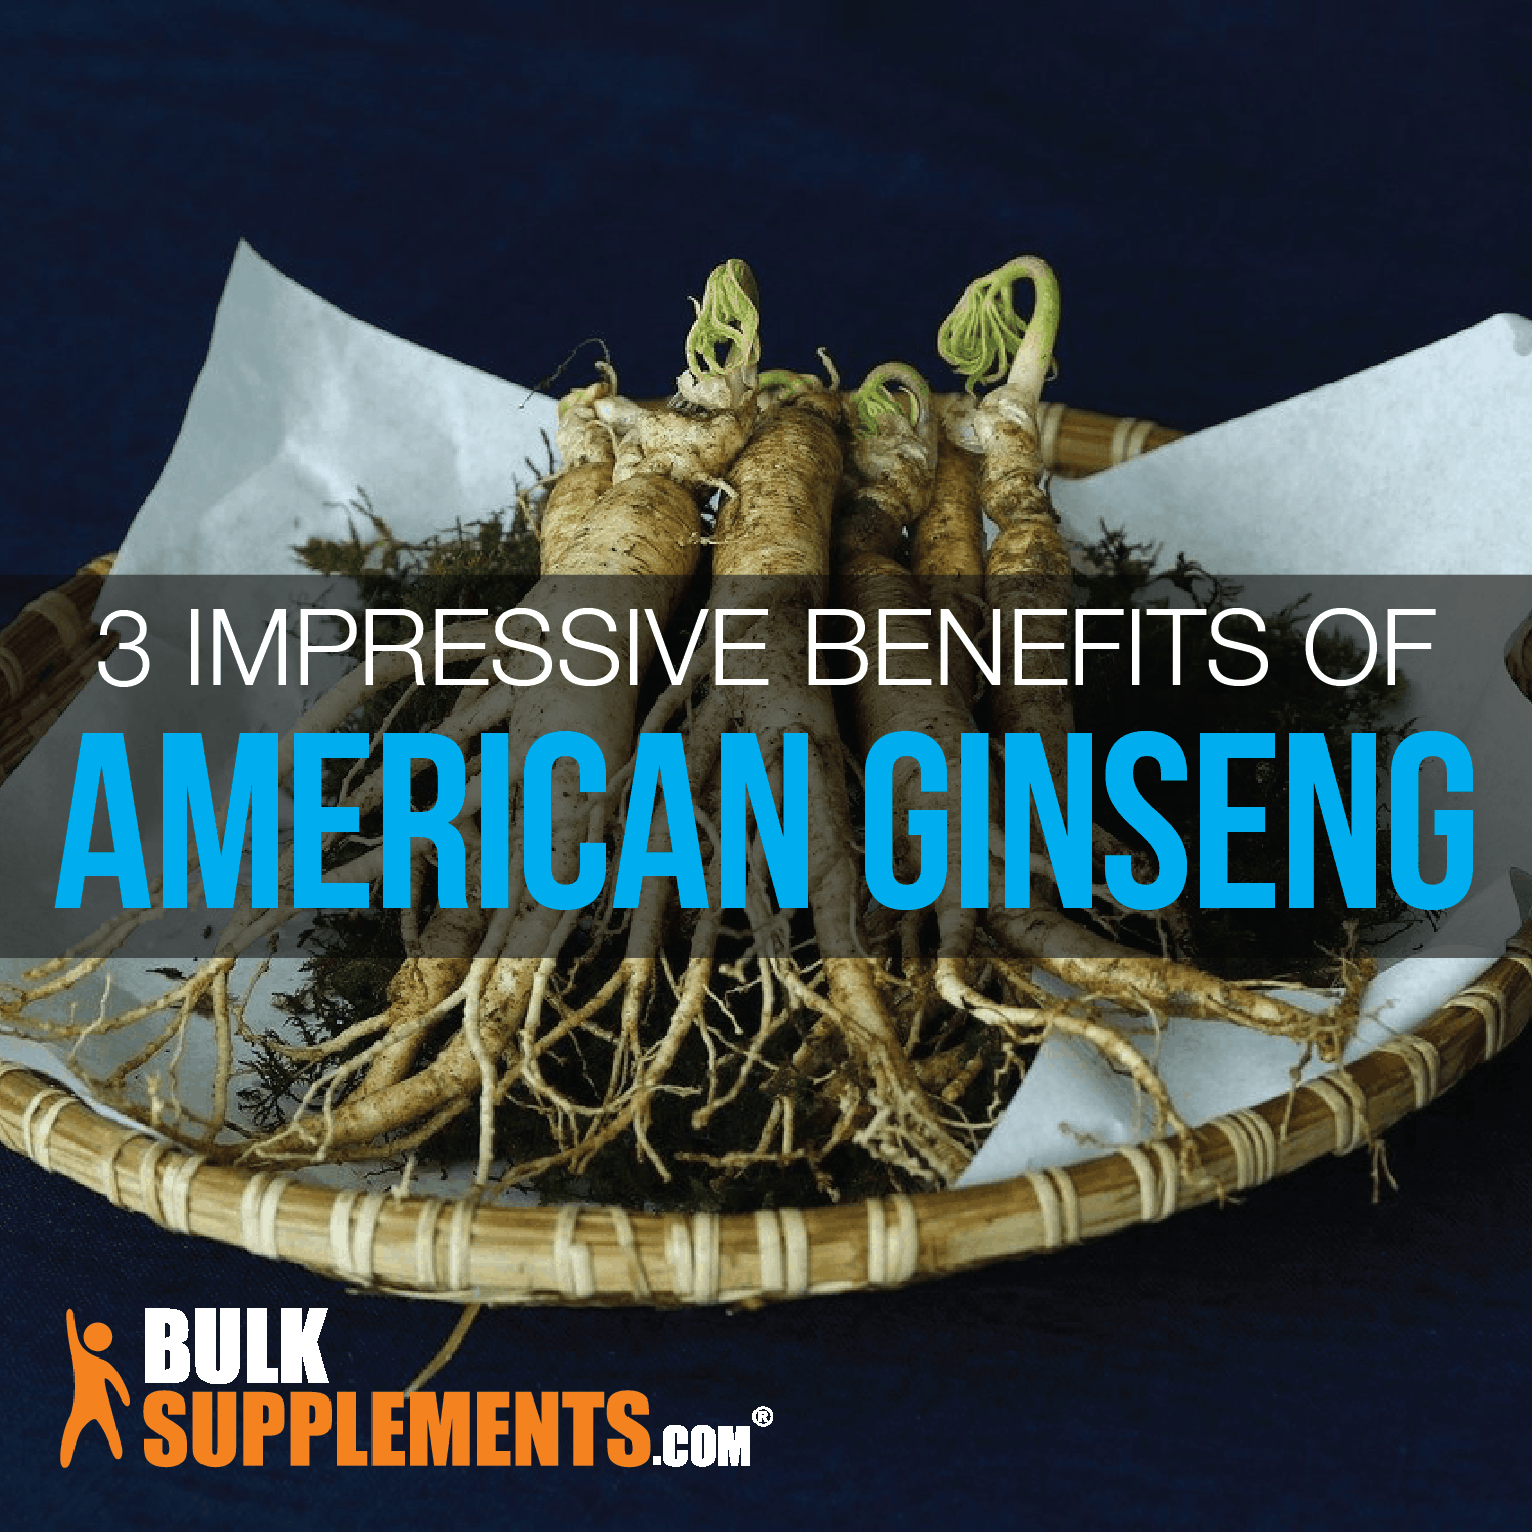 American ginseng benefits